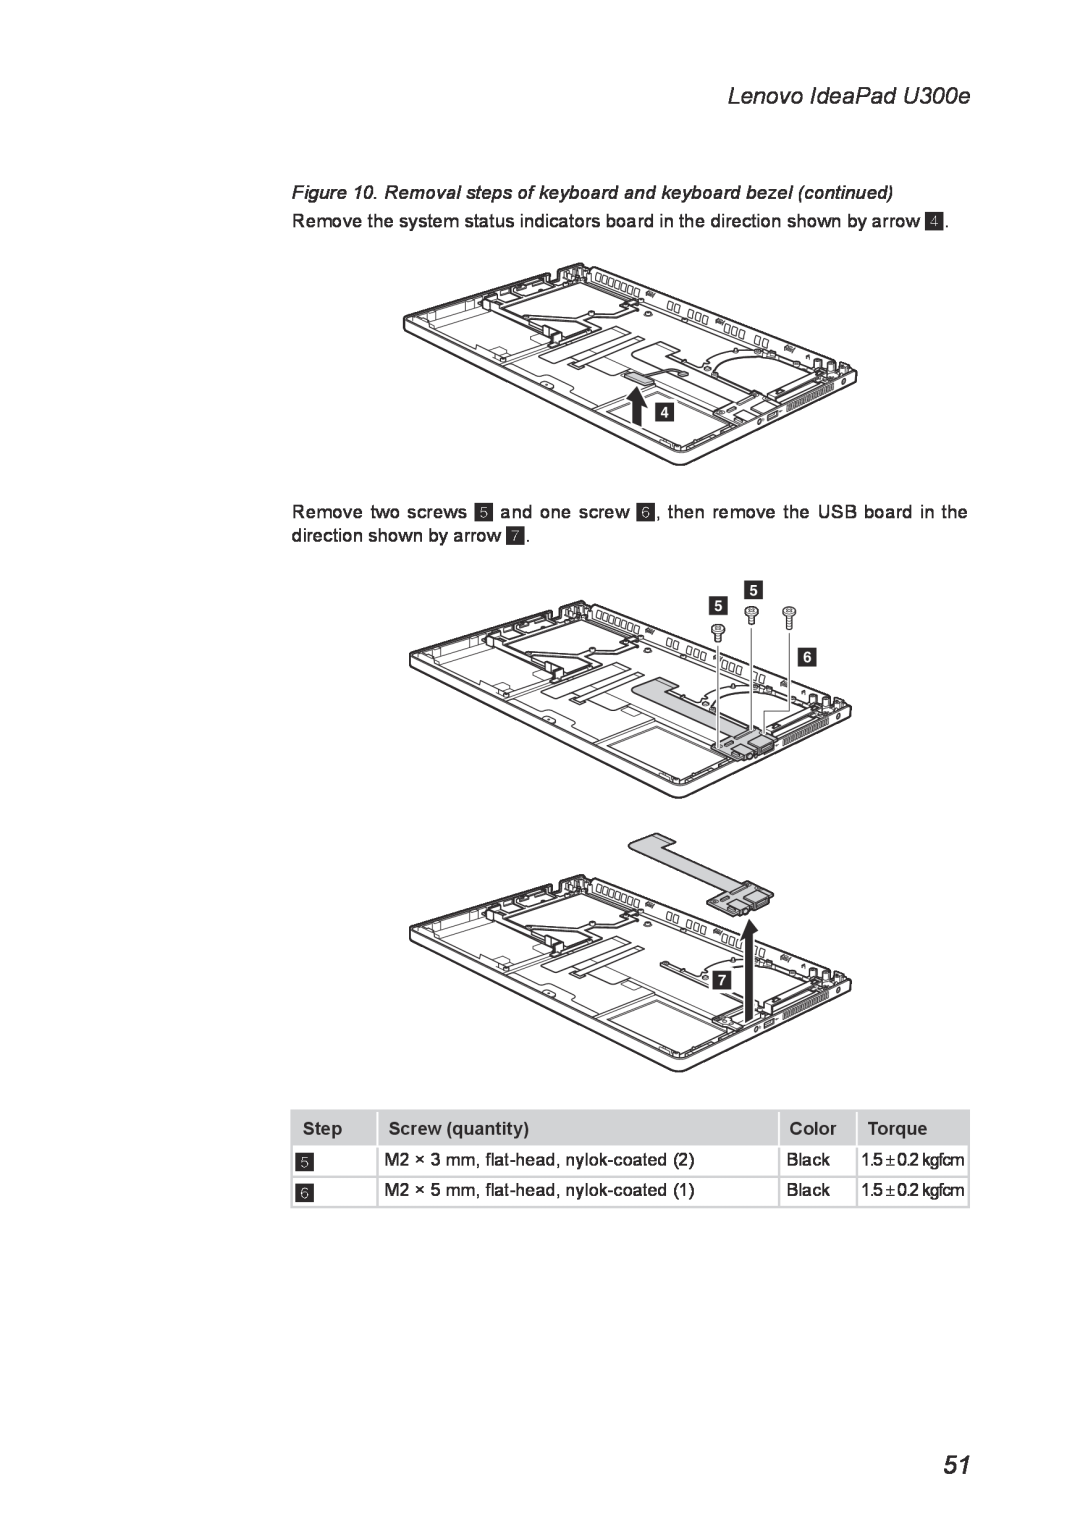 Lenovo U300E manual Lenovo IdeaPad U300e, Removal steps of keyboard and keyboard bezel continued 